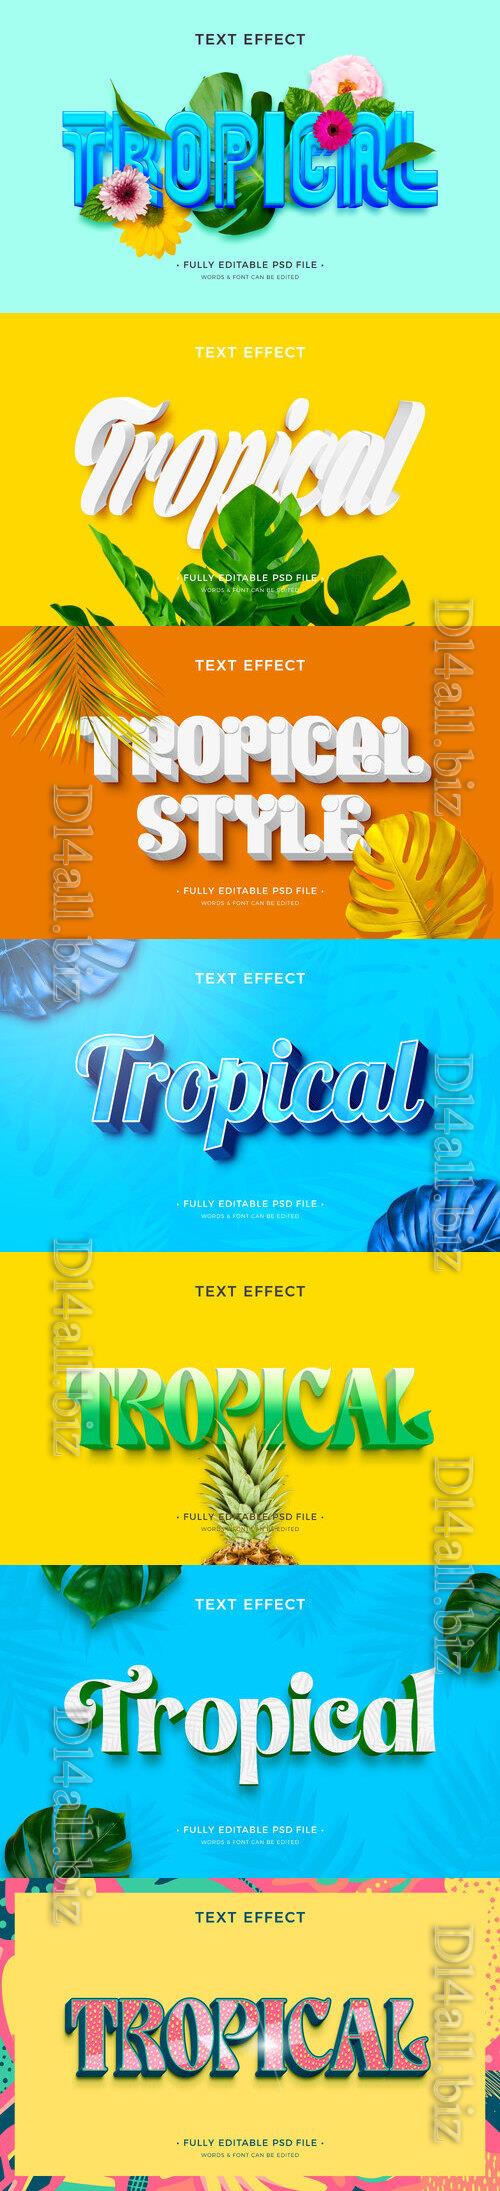 PSD tropical text effect vol 1